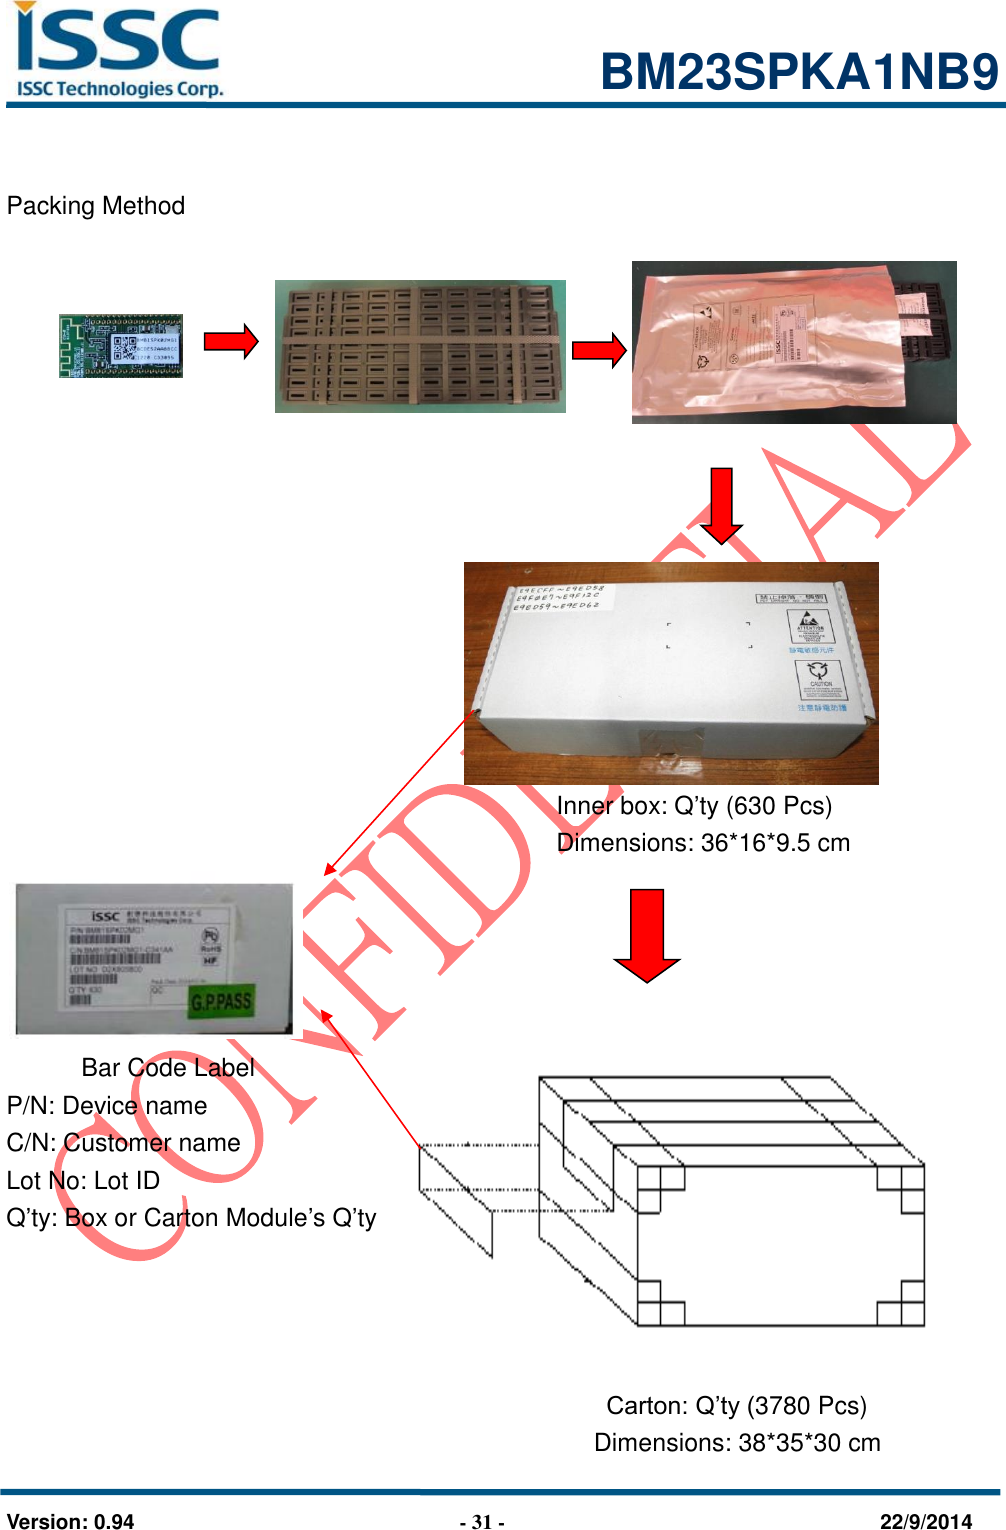                                                            BM23SPKA1NB9   Version: 0.94                              - 31 -                                    22/9/2014  Packing Method                                                              Inner box: Q’ty (630 Pcs)                                             Dimensions: 36*16*9.5 cm        Bar Code Label P/N: Device name C/N: Customer name Lot No: Lot ID Q’ty: Box or Carton Module’s Q’ty                                                     Carton: Q’ty (3780 Pcs)                                                Dimensions: 38*35*30 cm 